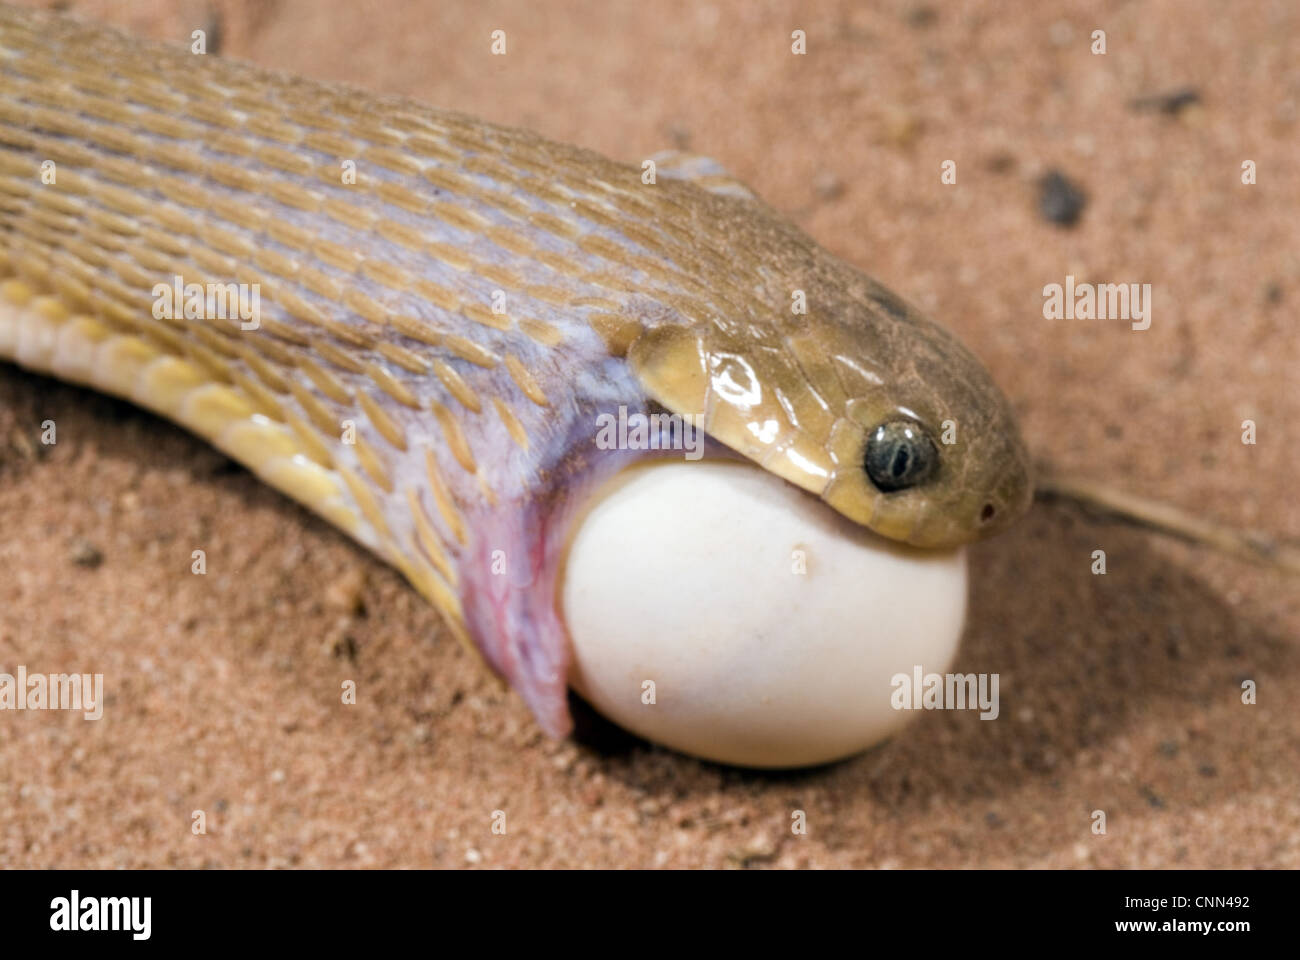 Common Egg-eater Snake (Dasypeltis scabra) adult, close-up of head, feeding on egg, Sindou, Leraba Province, Burkina Faso Stock Photo